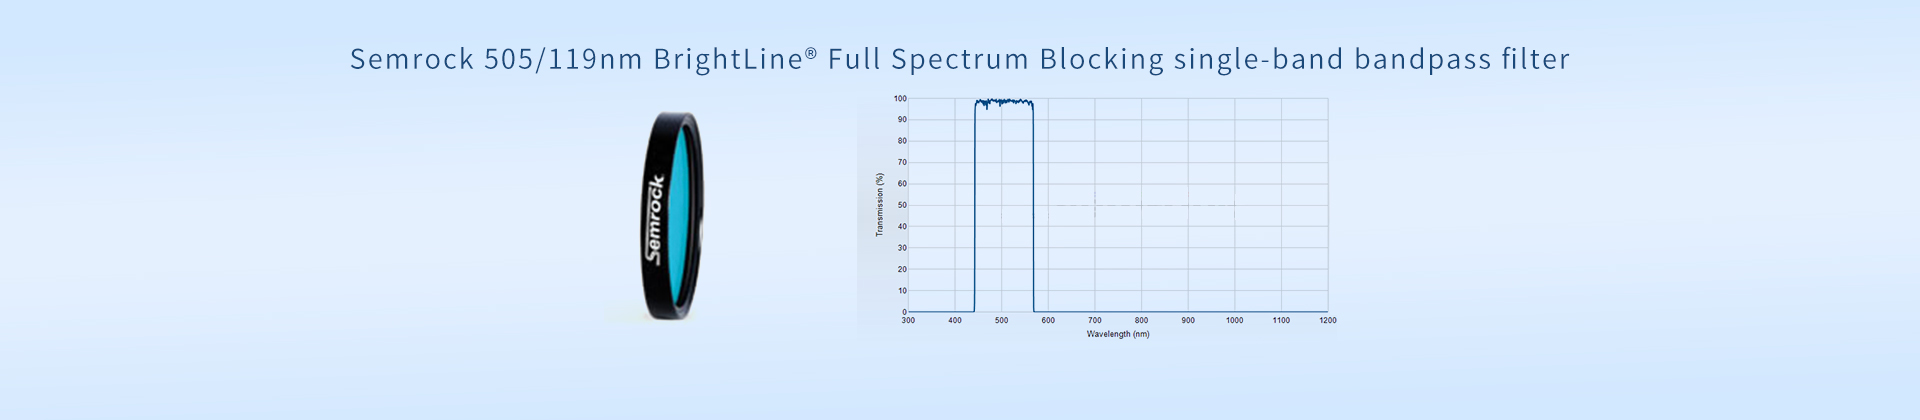 Semrock 505/119nm BrightLine® Full Spectrum Blocking single-band bandpass filter